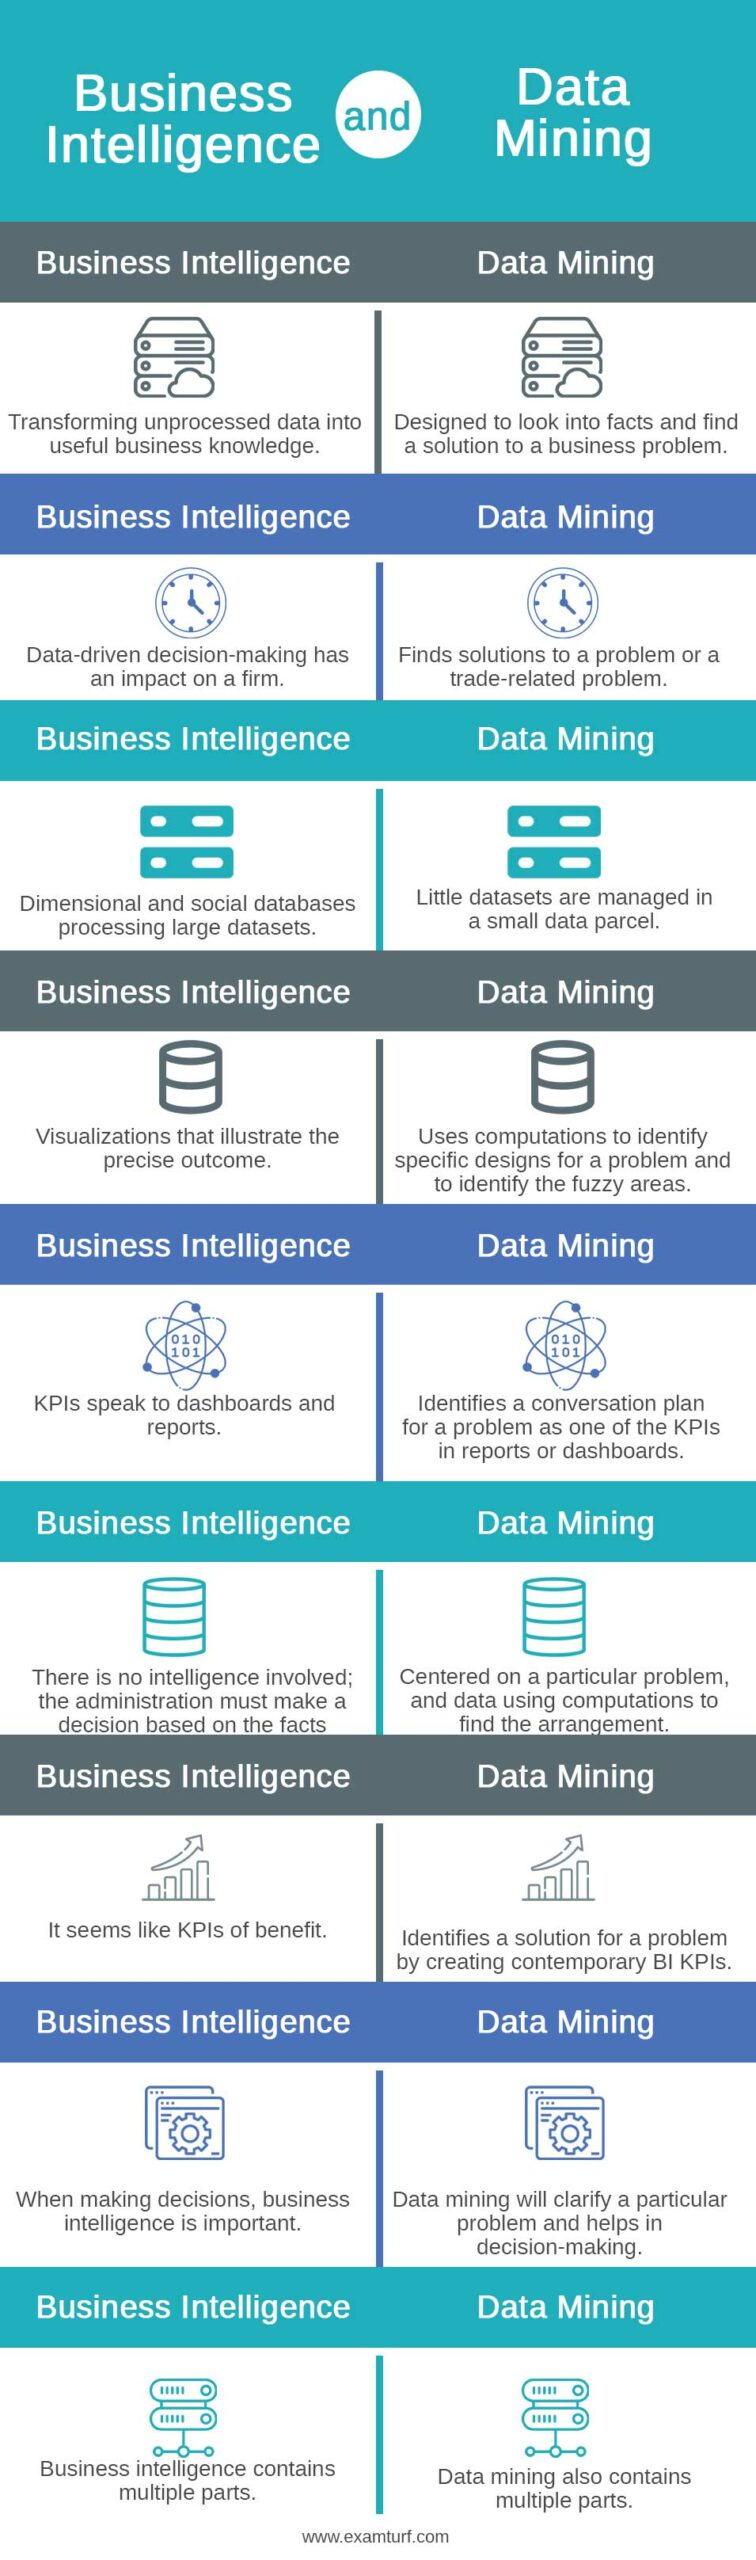 Business-Intelligence-and-Data-Mining-info